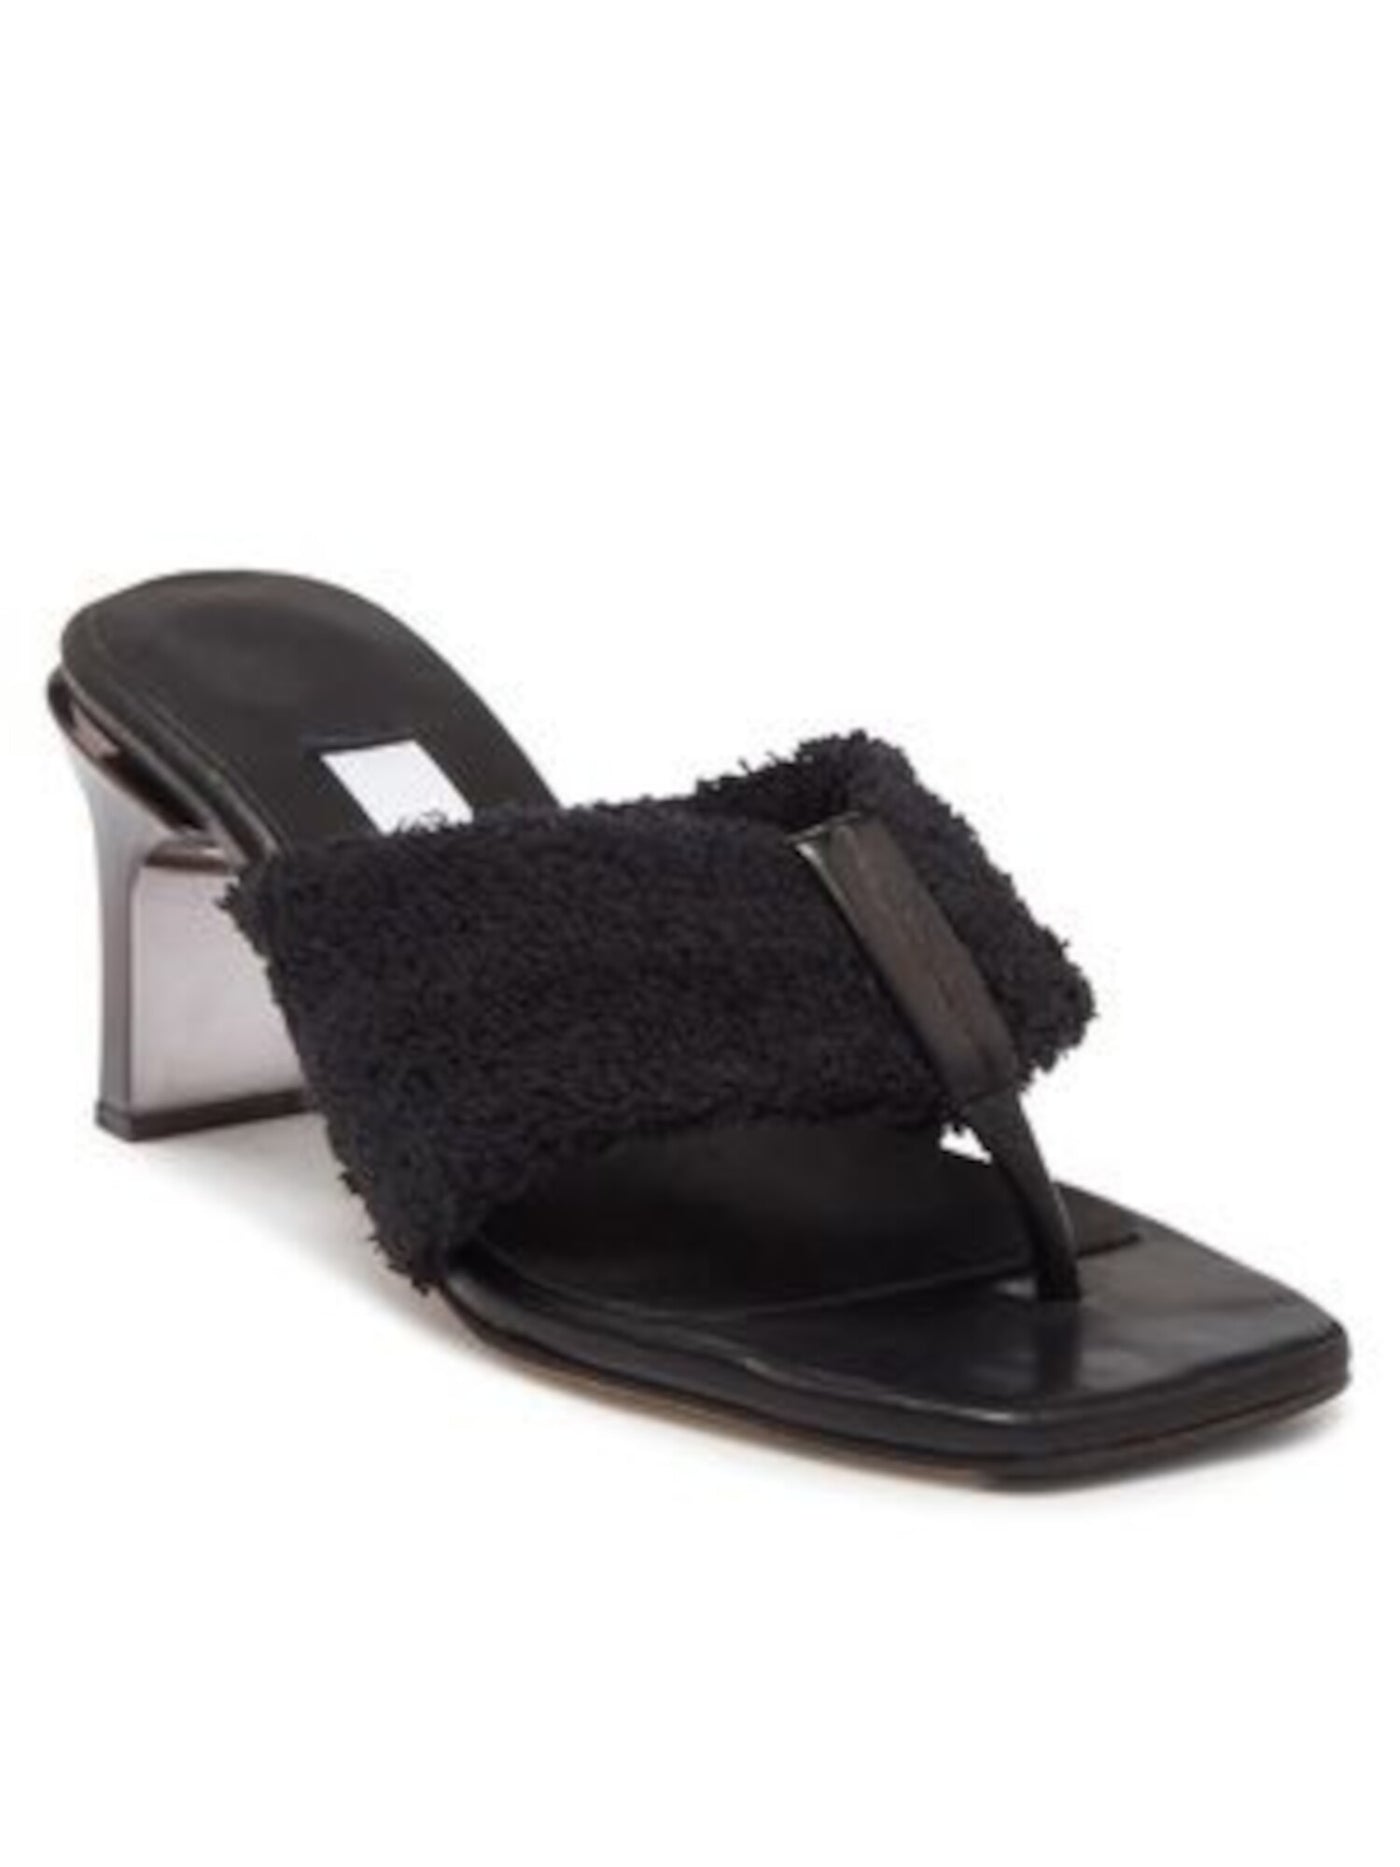 MIISTA Womens Black Towel Translucent Designer Heel Padded Carissa Square Toe Slip On Leather Thong Sandals Shoes 39